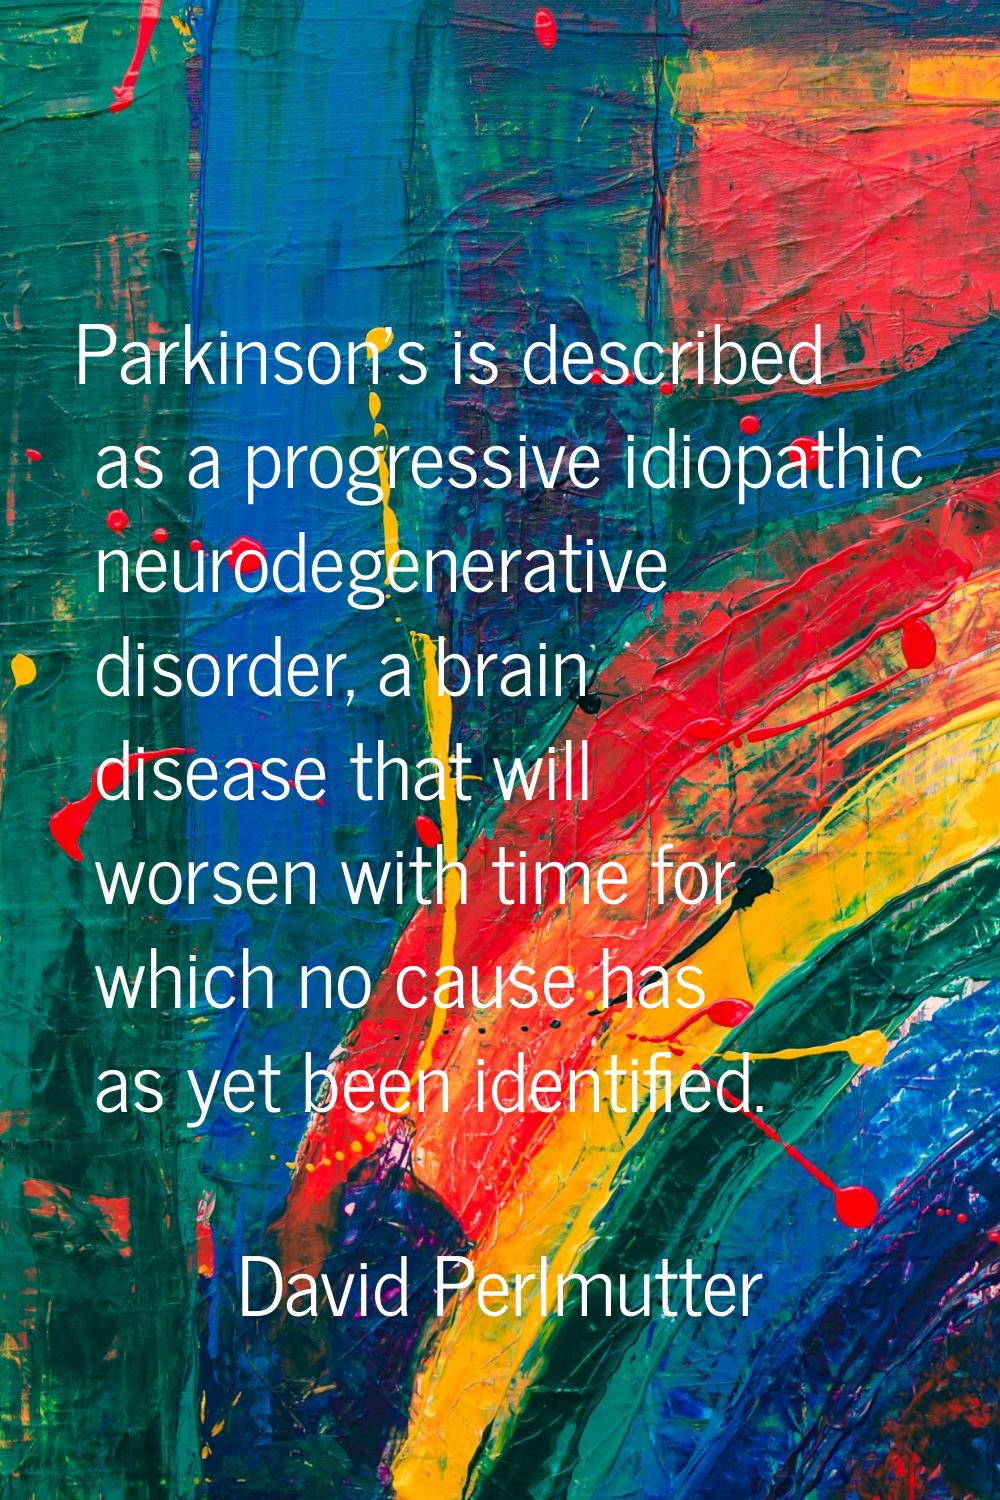 Parkinson's is described as a progressive idiopathic neurodegenerative disorder, a brain disease th